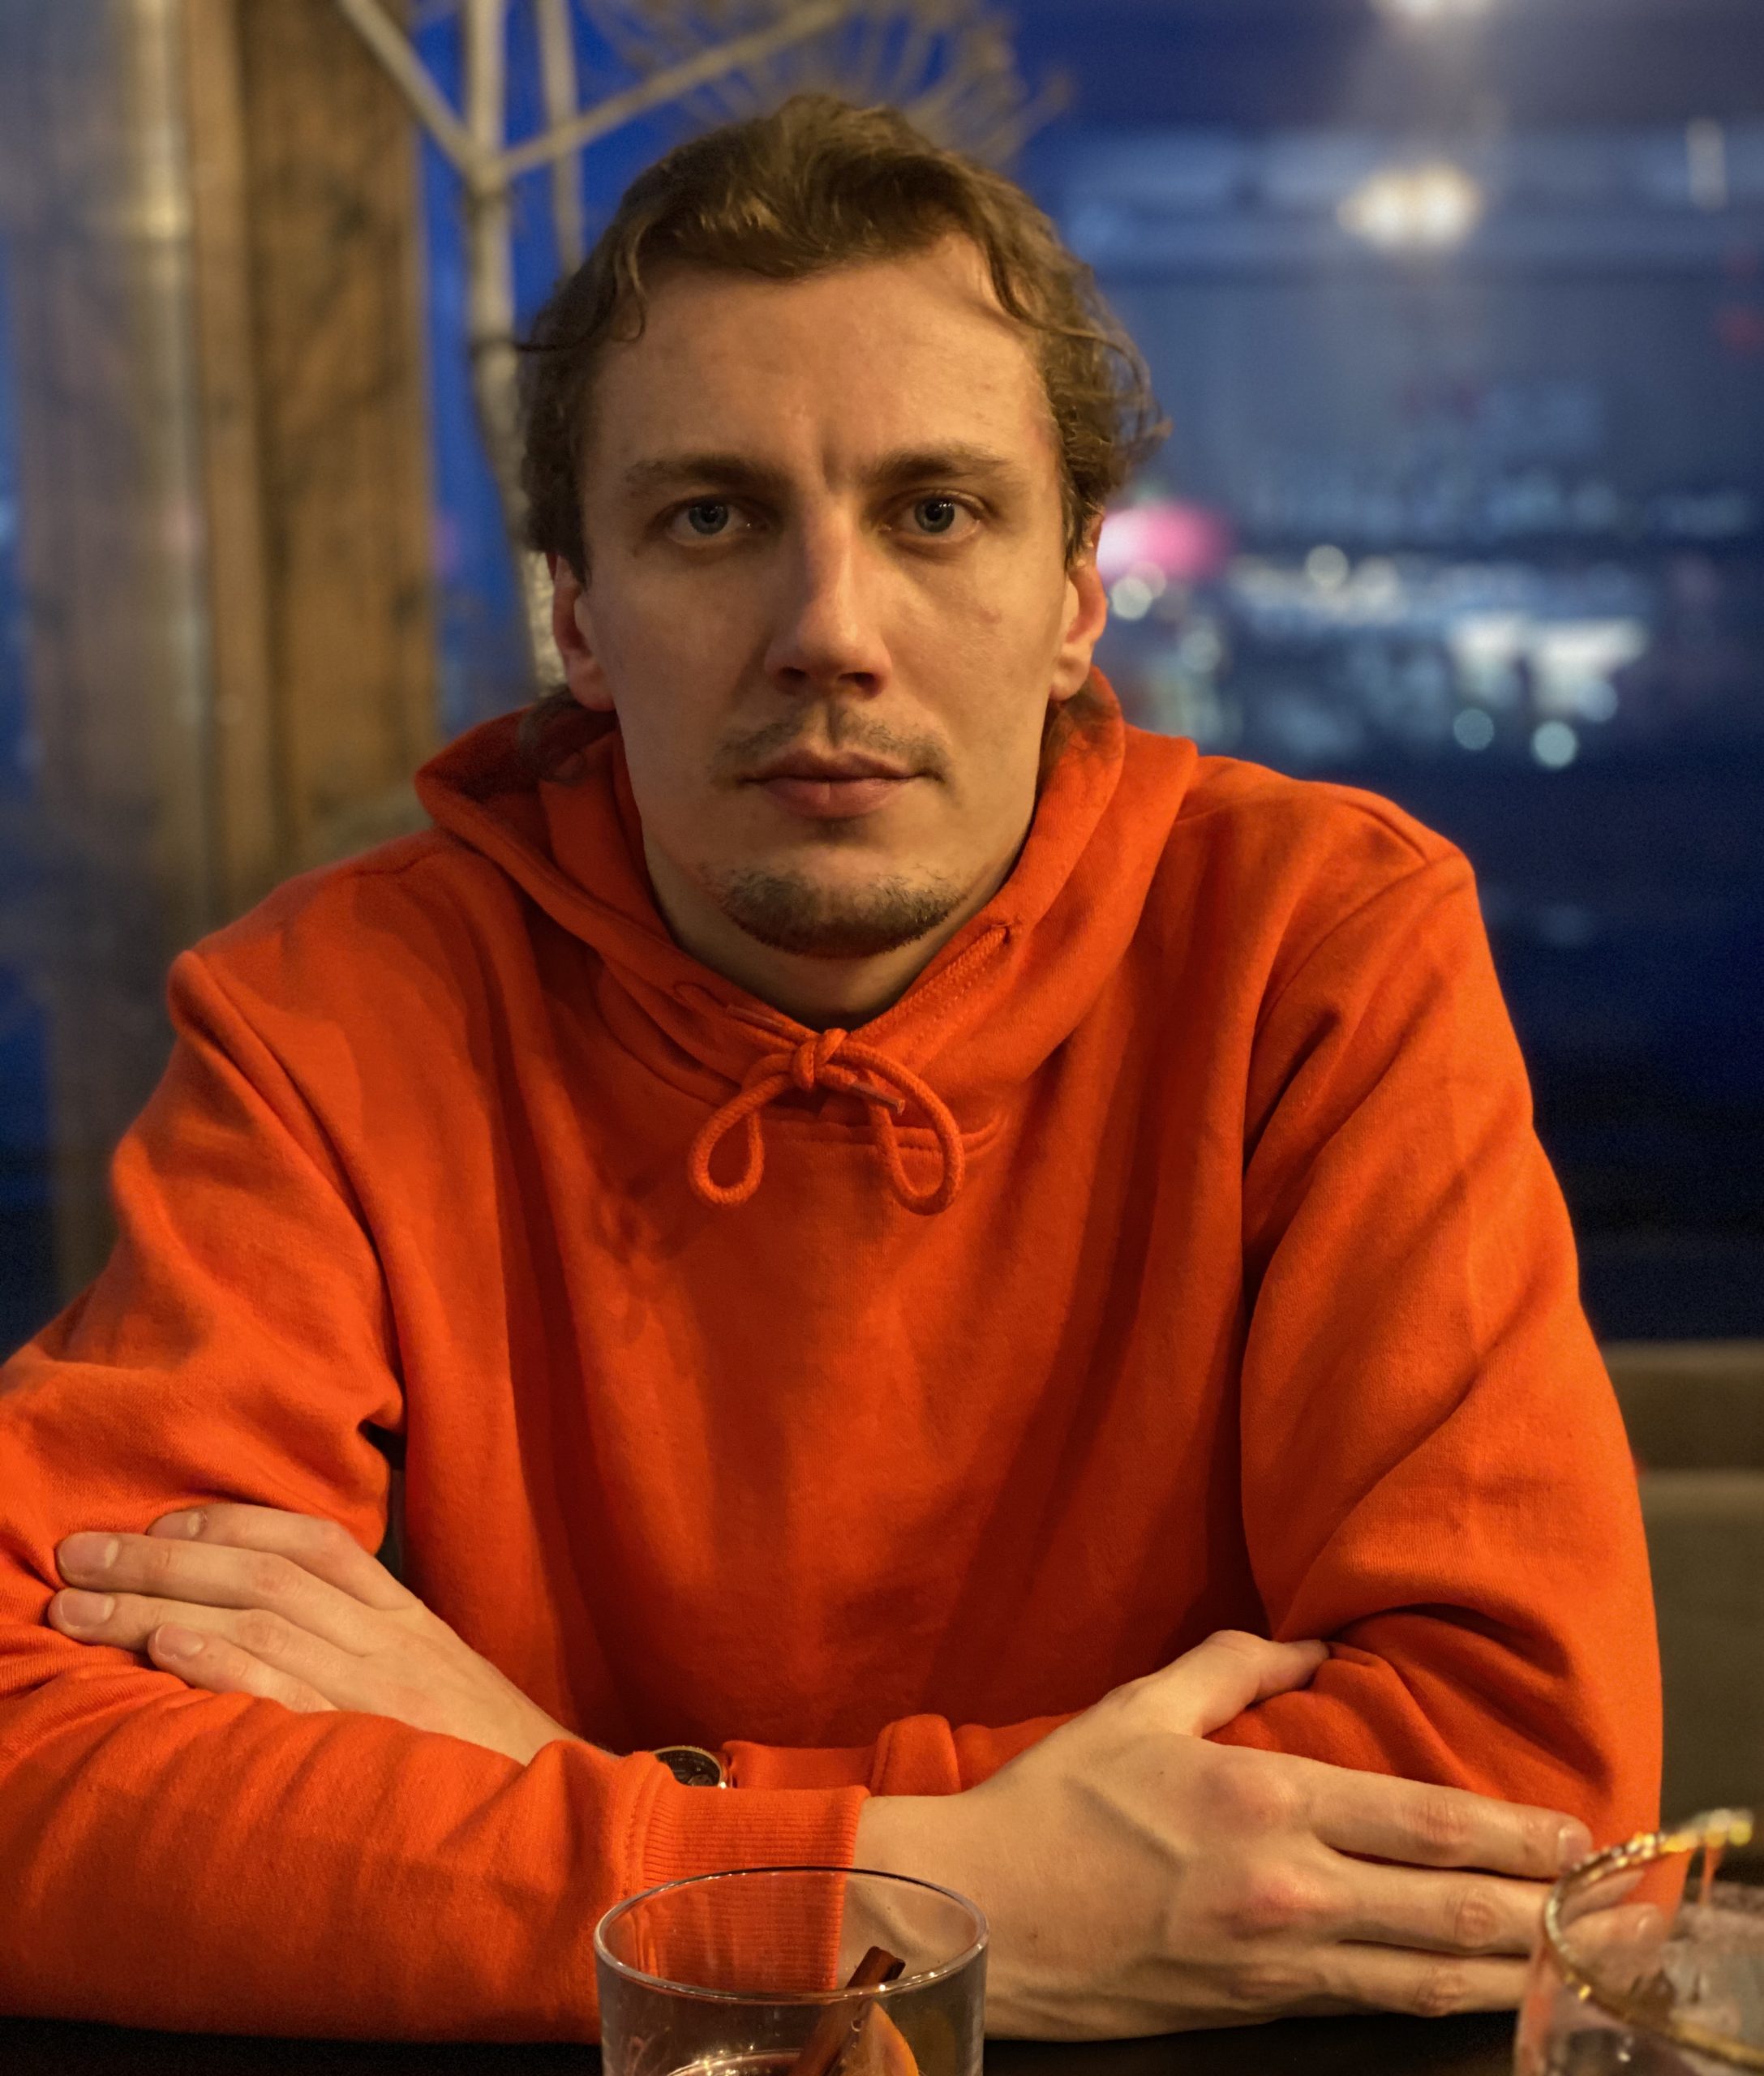 Sergey, founder of productplacementblog.com